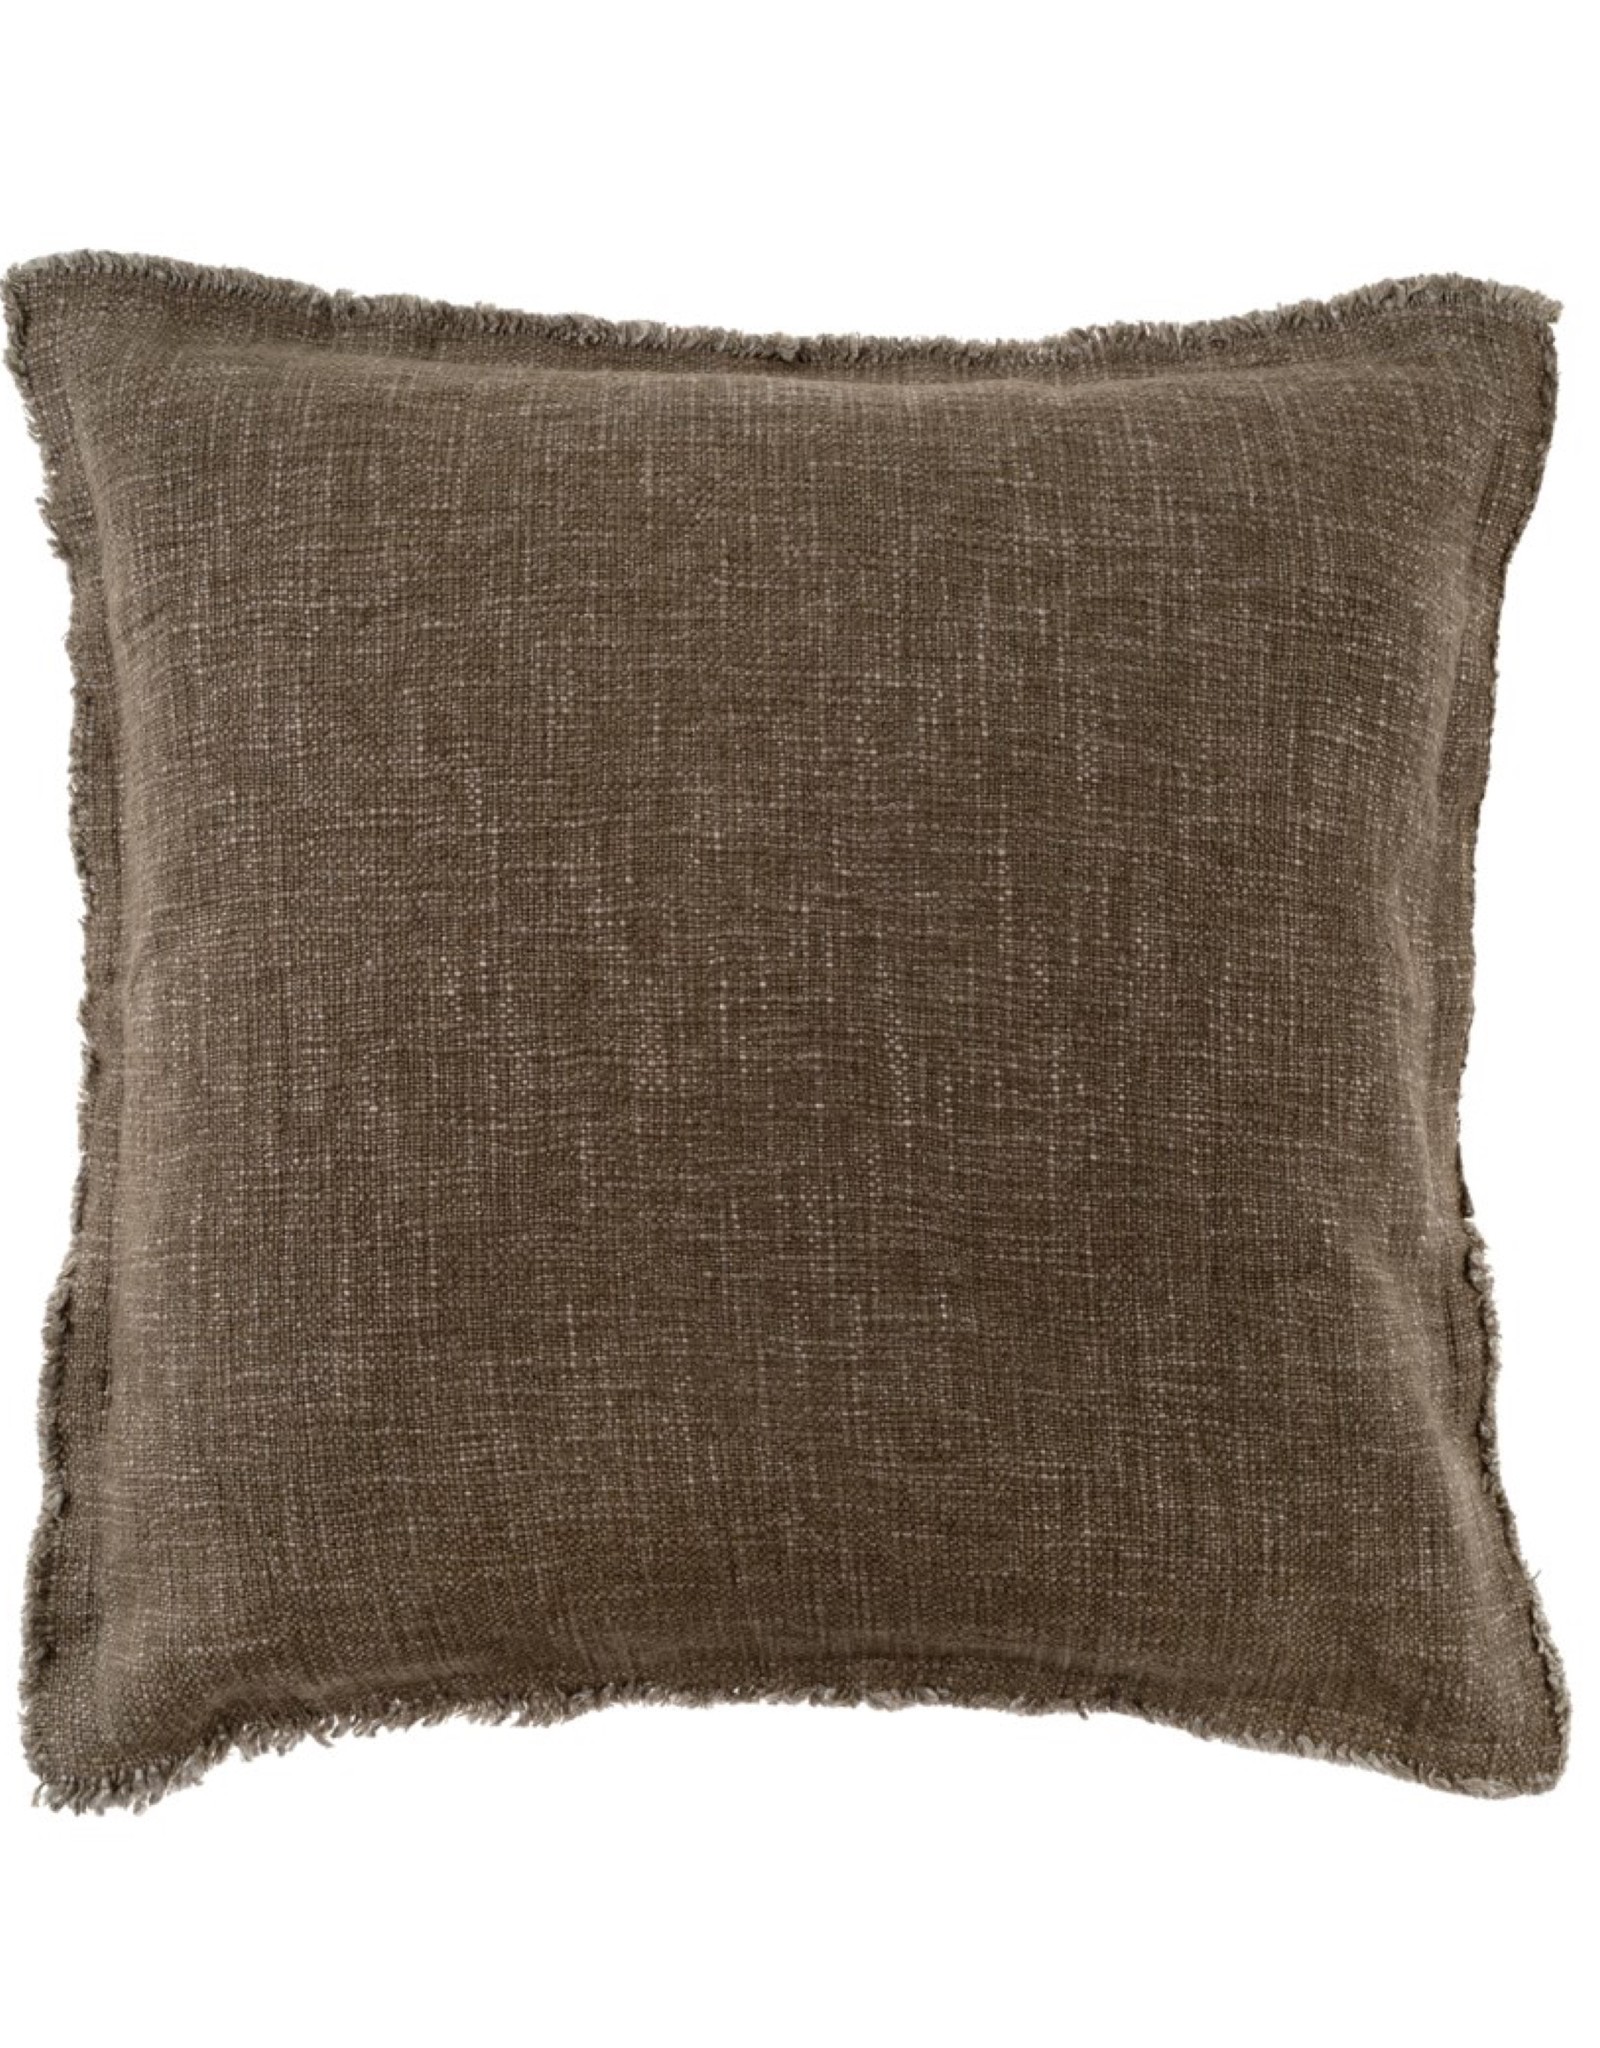 Indaba Cushions Indaba Selena Linen Dark Green 20 x 20 1-4932-C